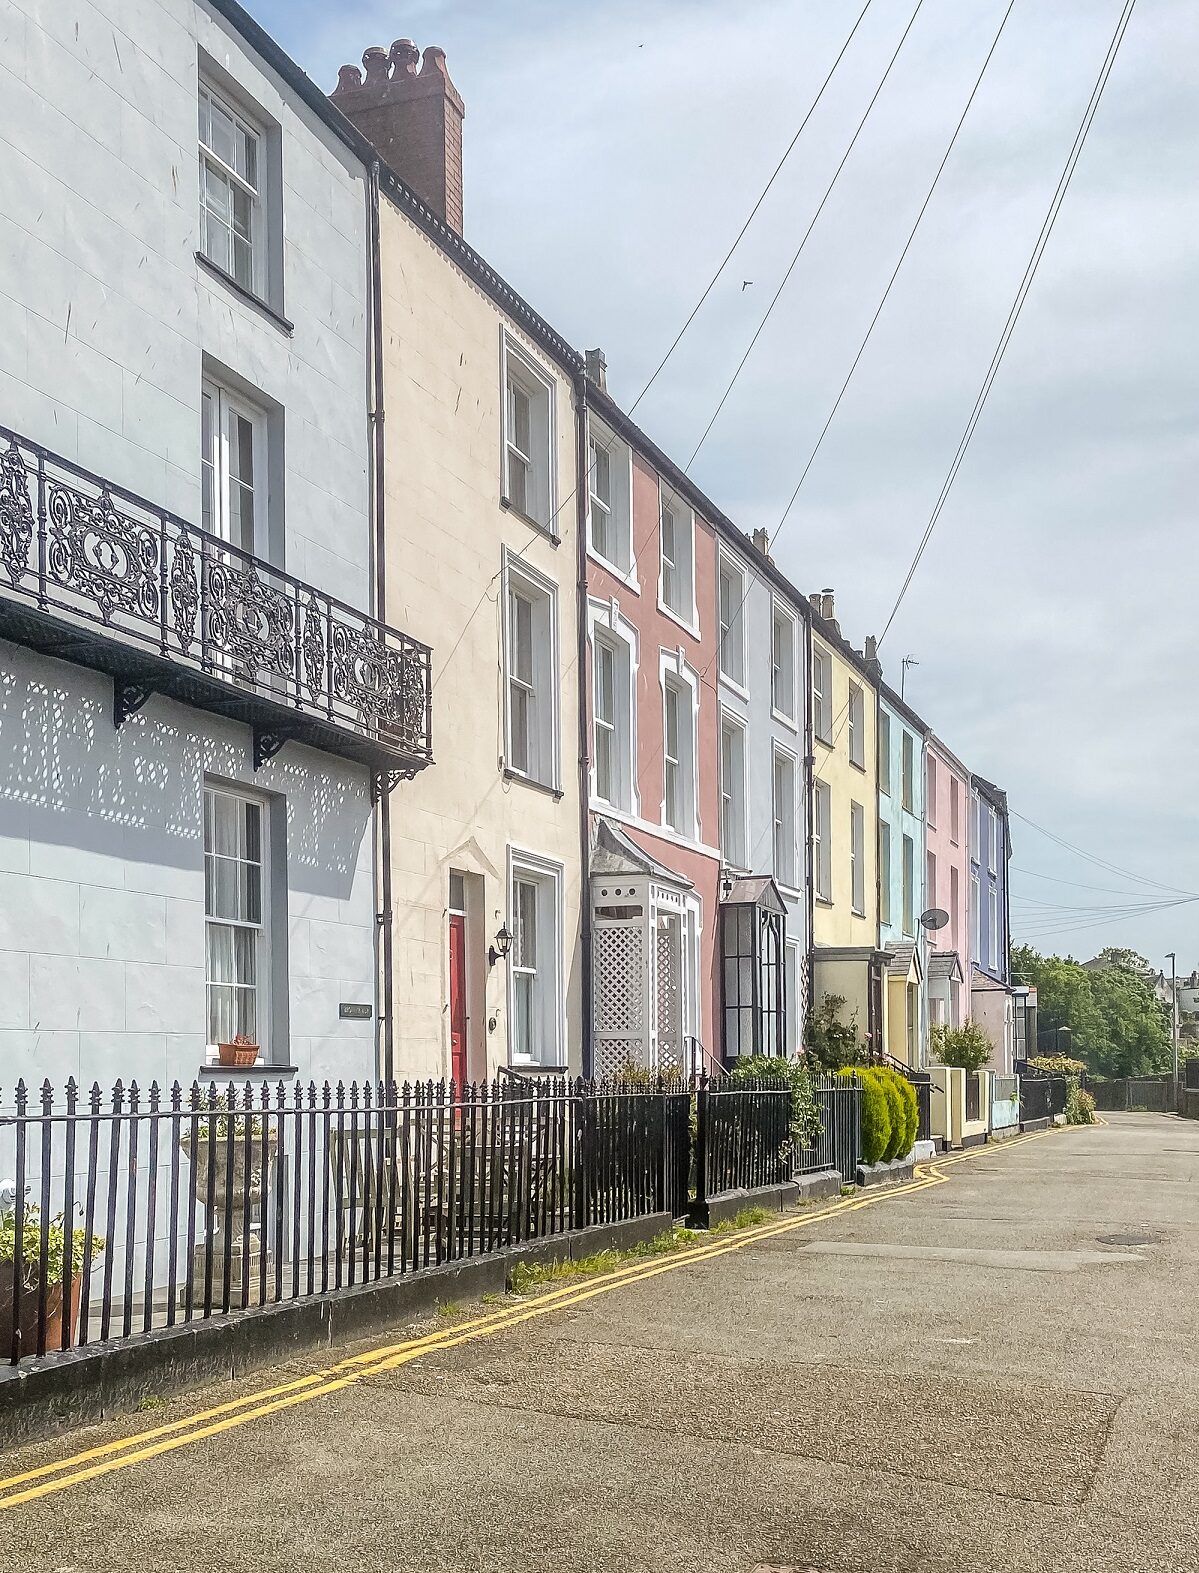 a row of colorful houses in Caernarfon